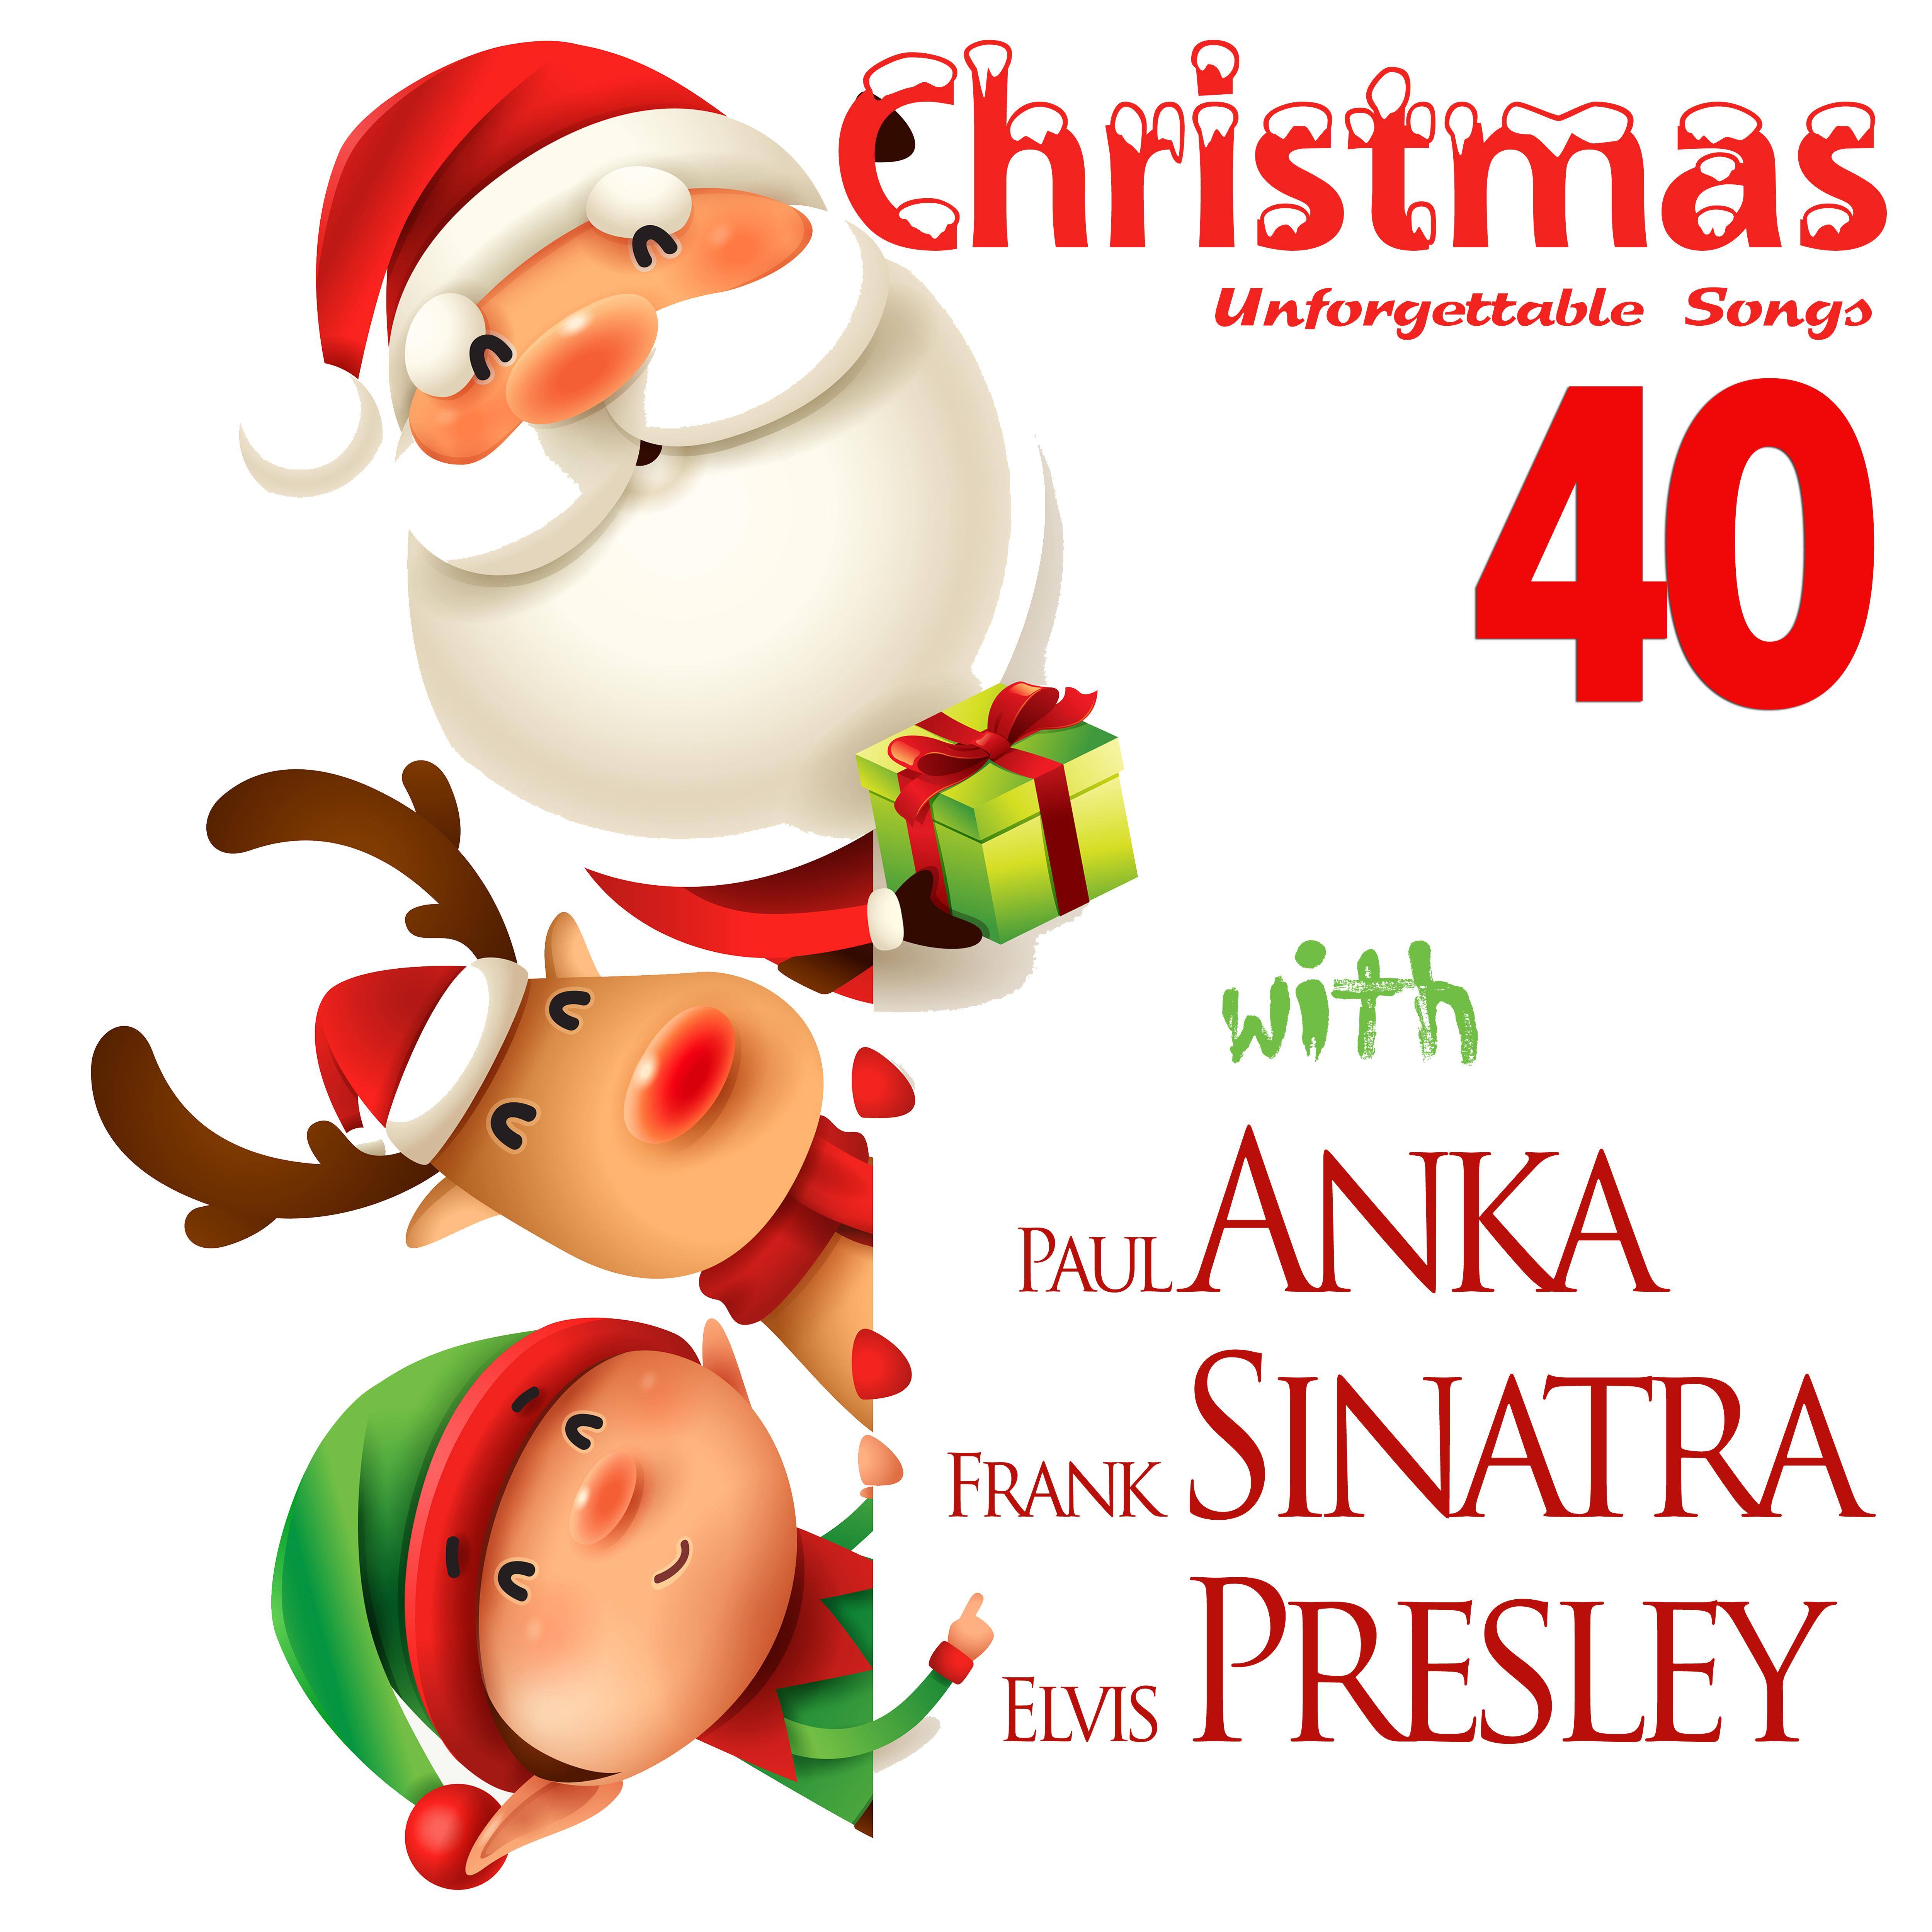 Christmas with Frank Sinatra, Elvis Presley, Paul Anka